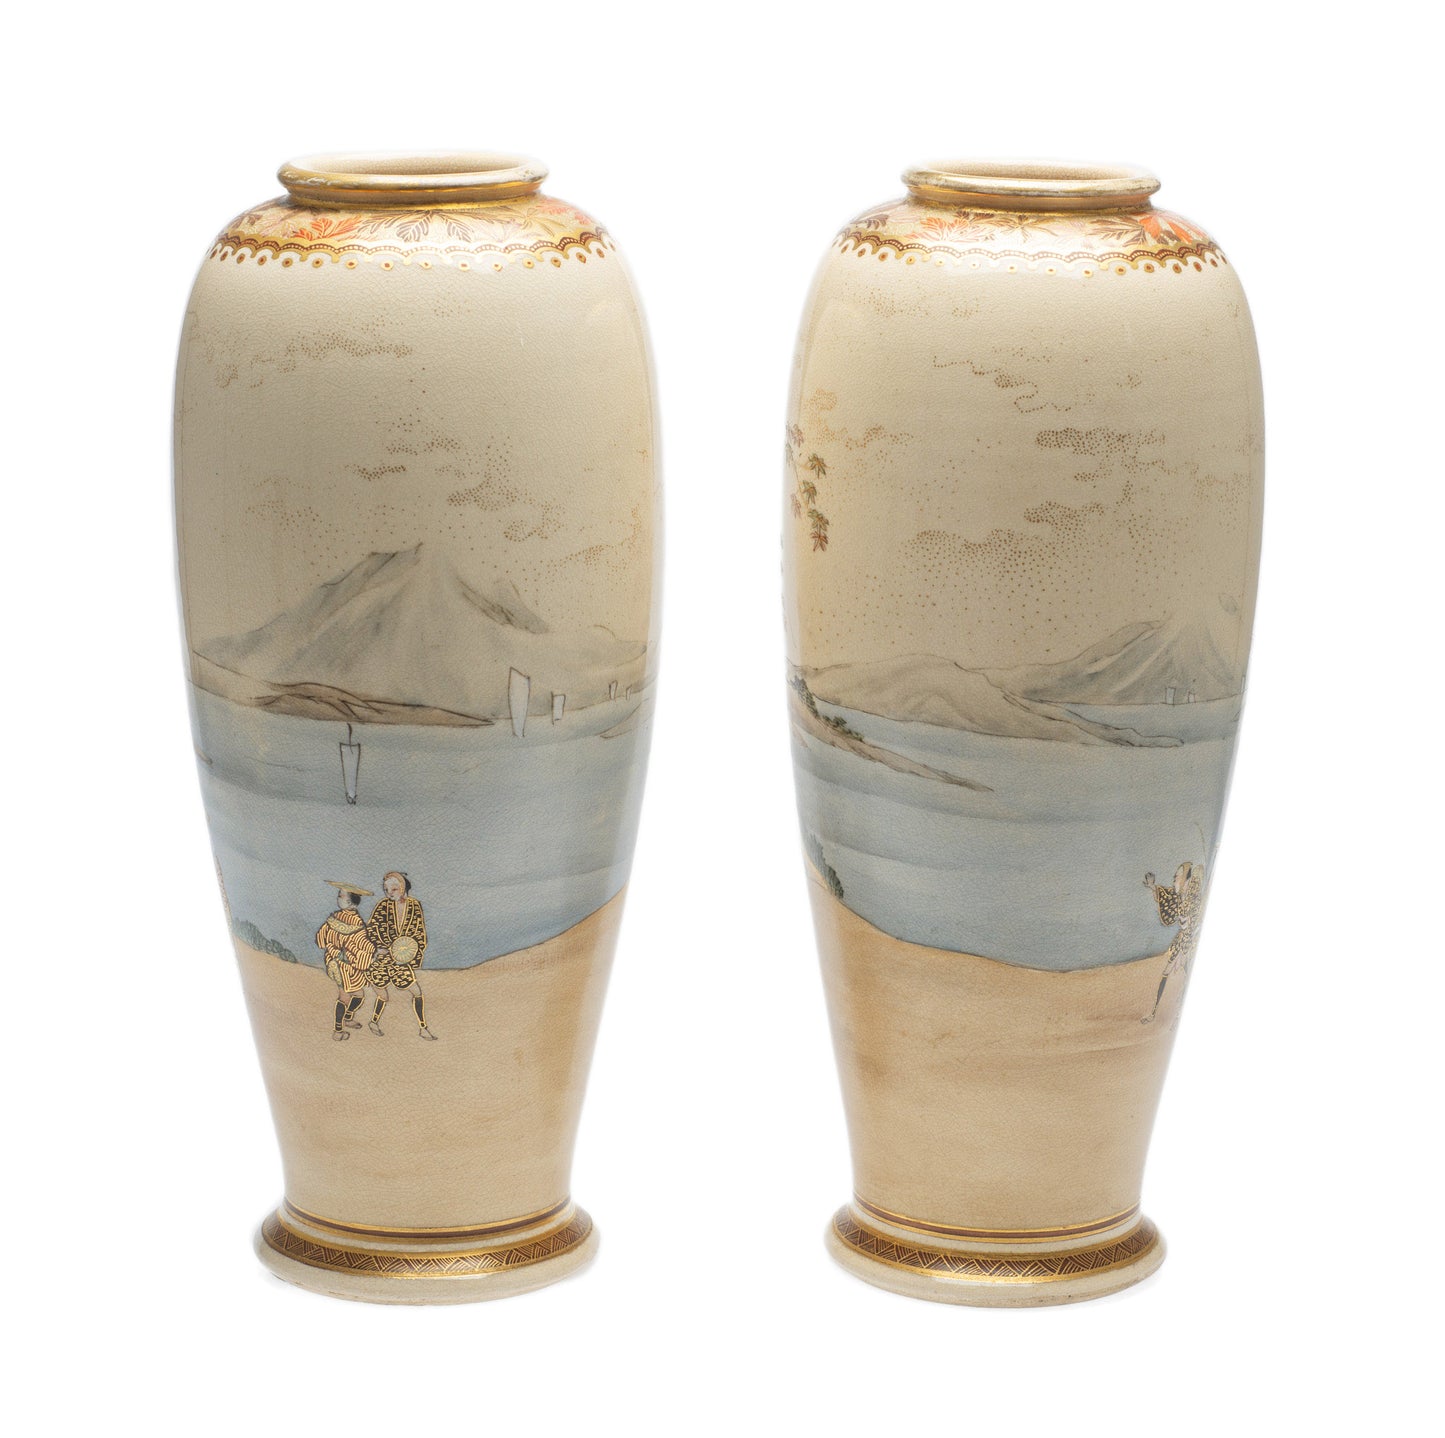 Pair Japanese Satsuma Ware Vases by Koshida - Meiji Period c1890 (Code 2546)